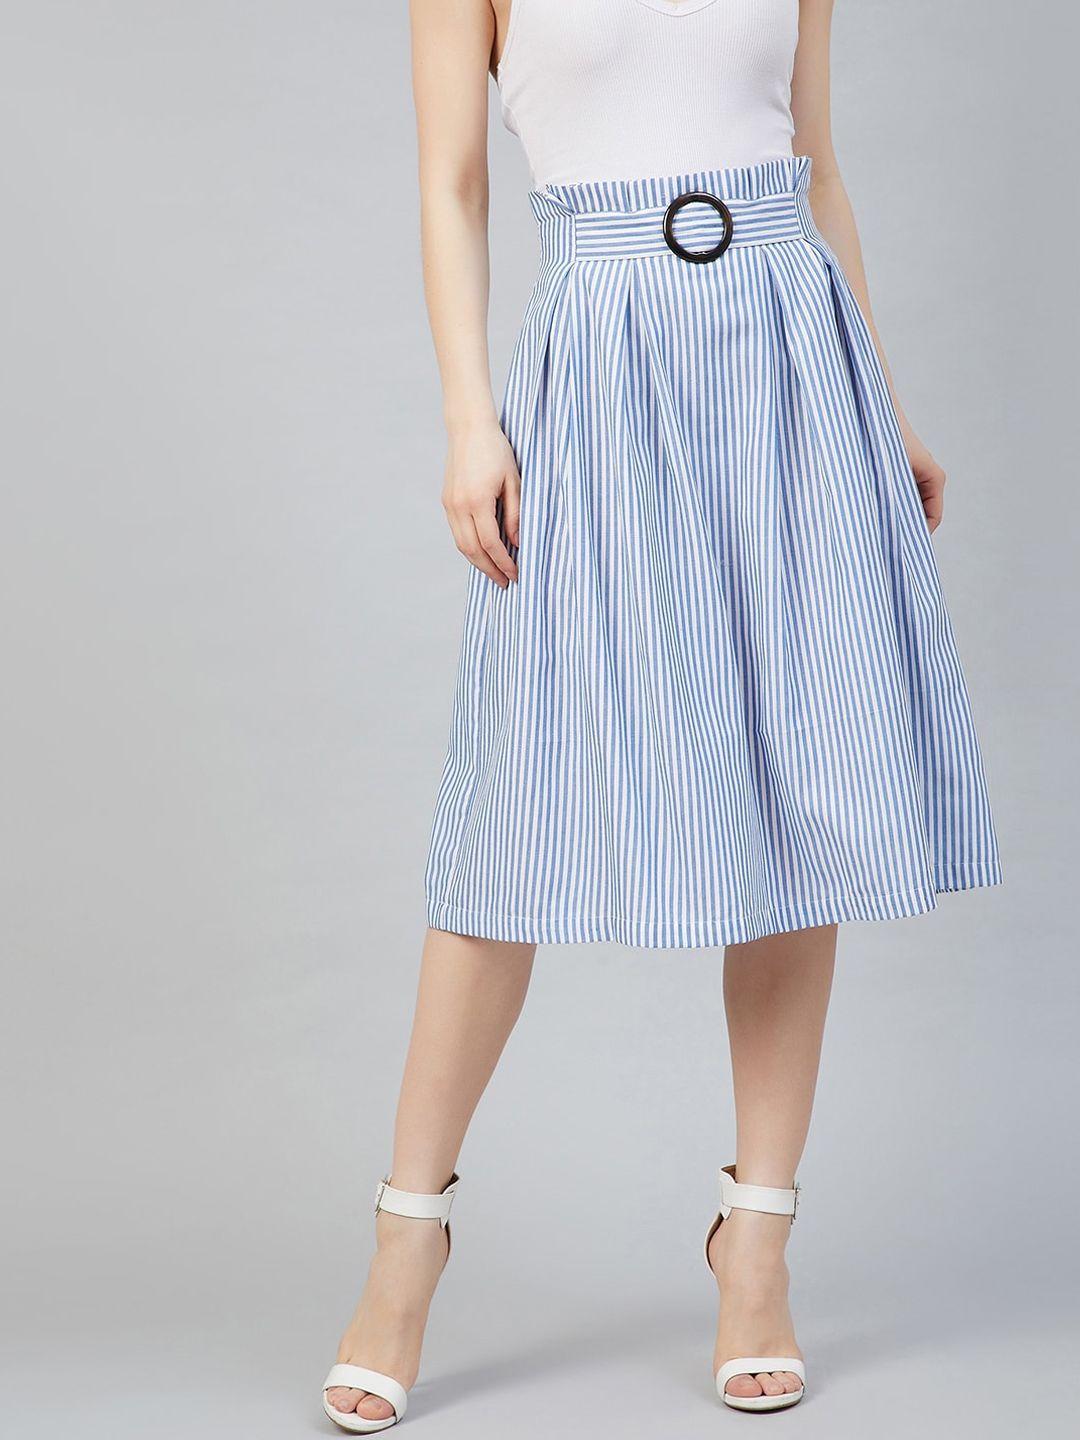 marie claire women blue & white striped a-line midi skirt